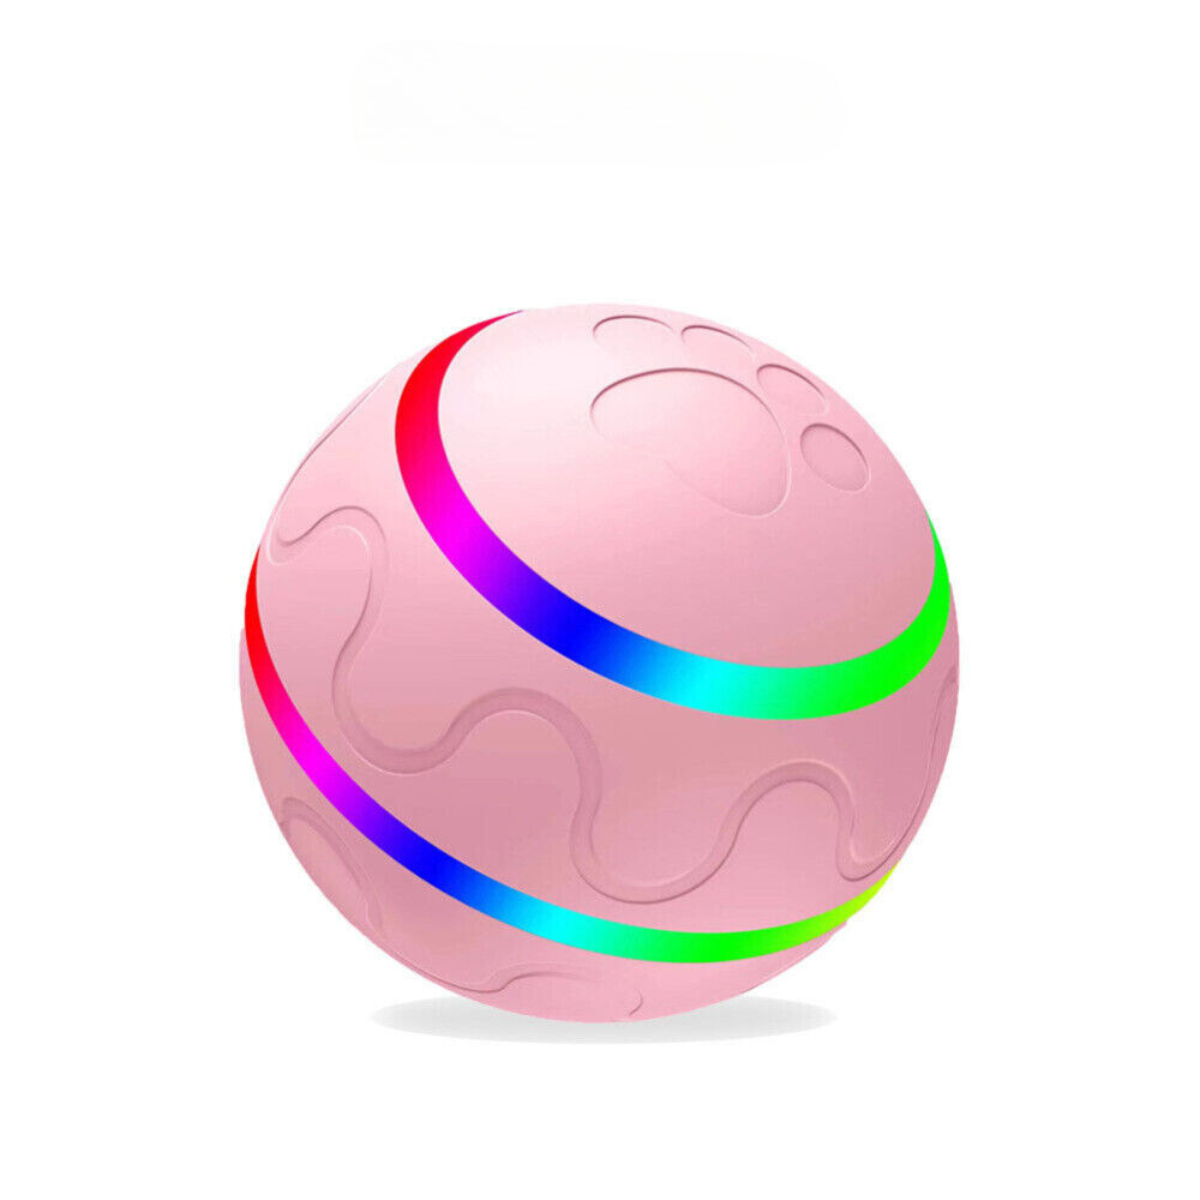 IntelliBall™ - Rechargeable Smart Pet Play Ball